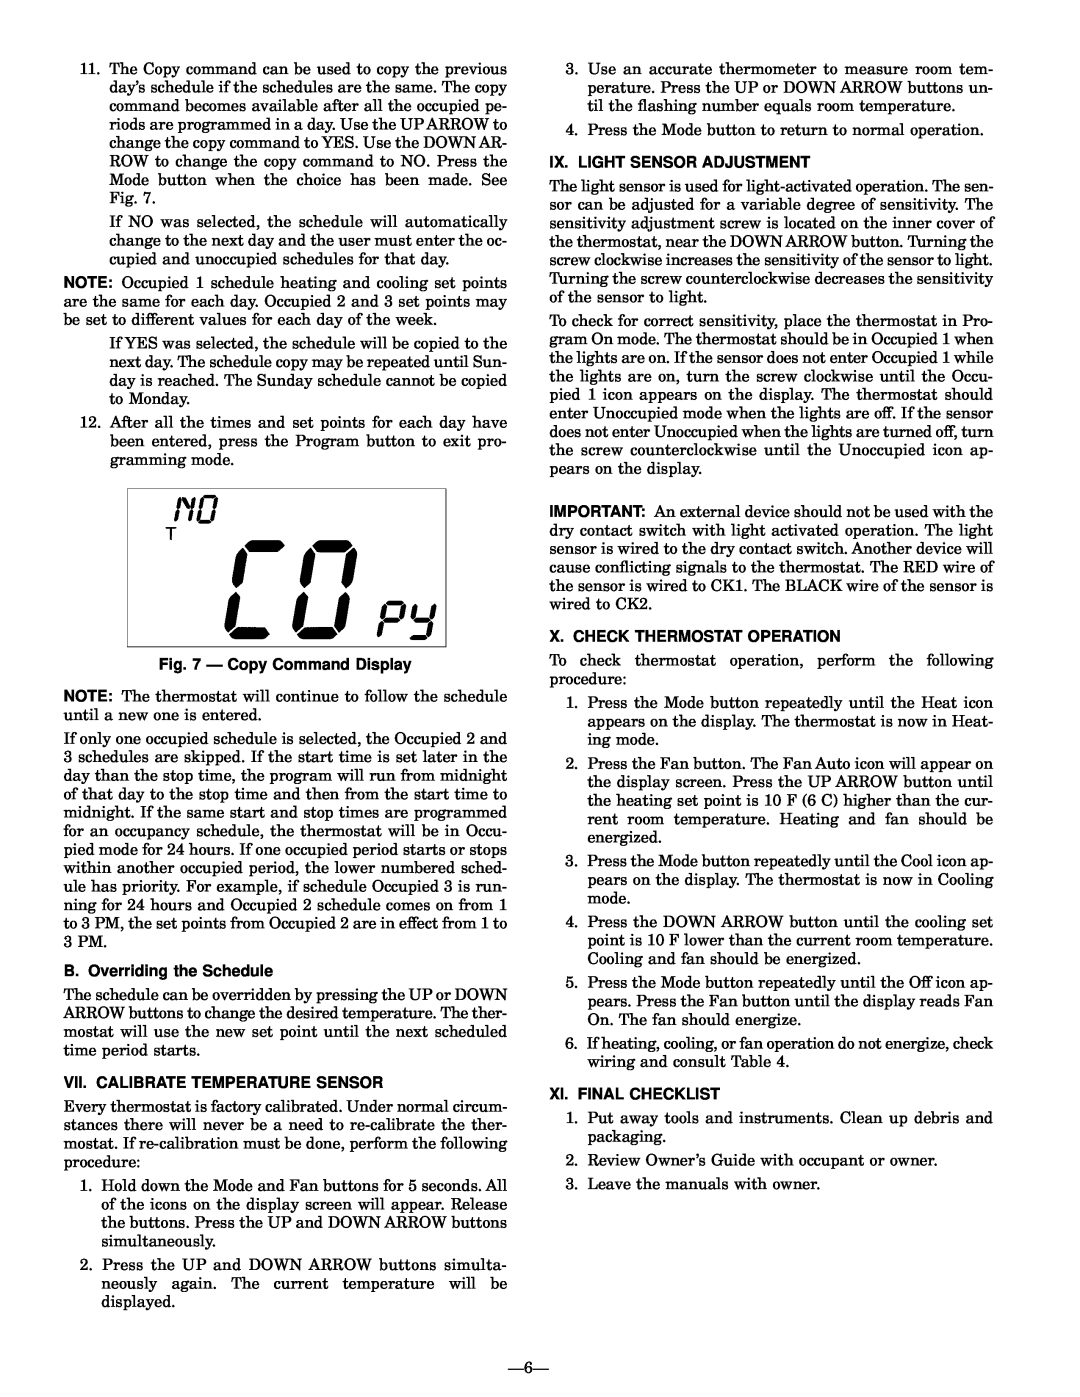 Bryant TSTATBBP250-LA Ð Copy Command Display, B. Overriding the Schedule, Vii. Calibrate Temperature Sensor 